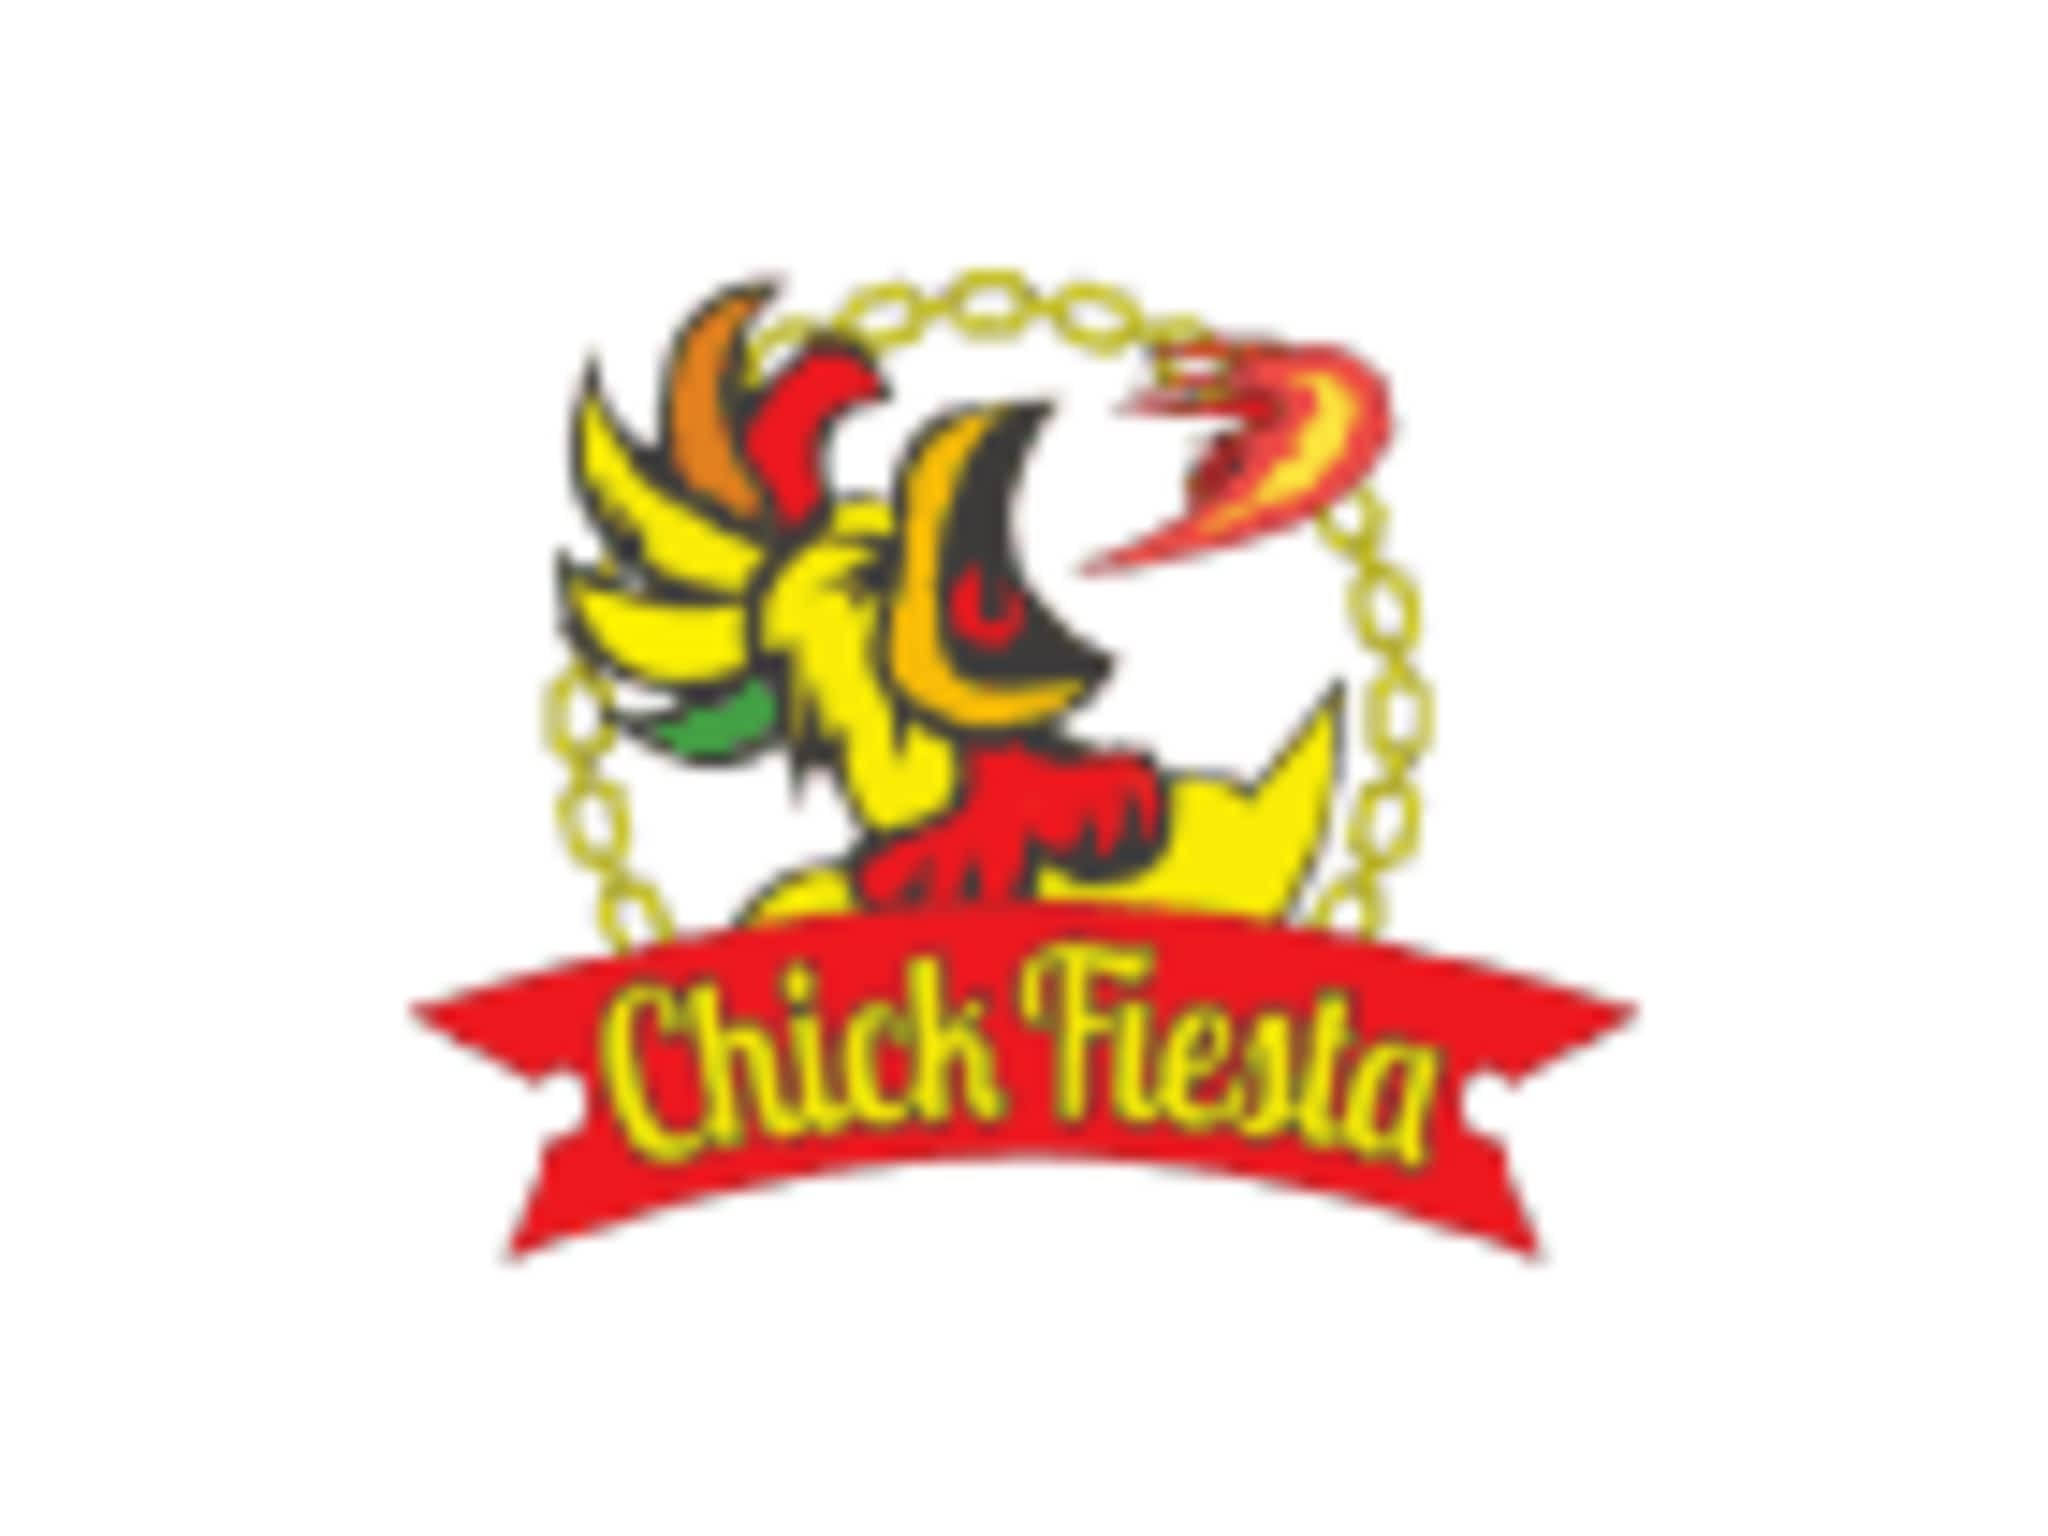 photo Chick Fiesta